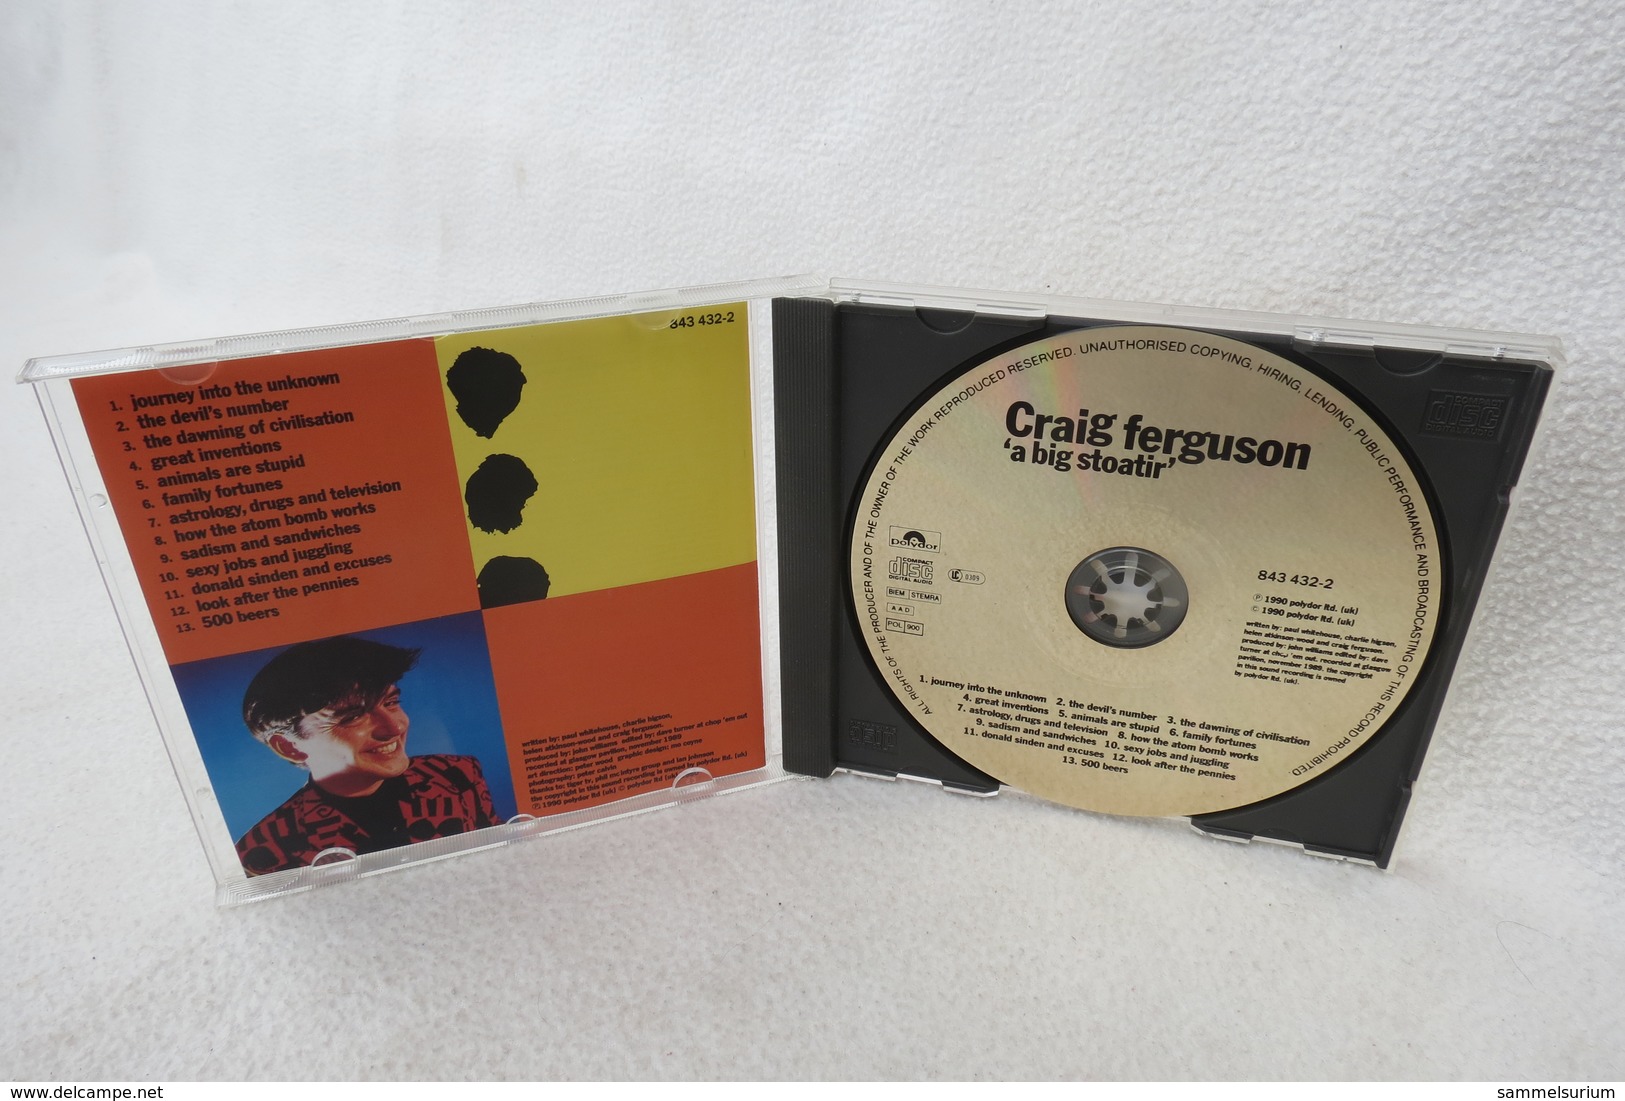 CD "Craig Ferguson" A Big Stoatir - Humor, Cabaret